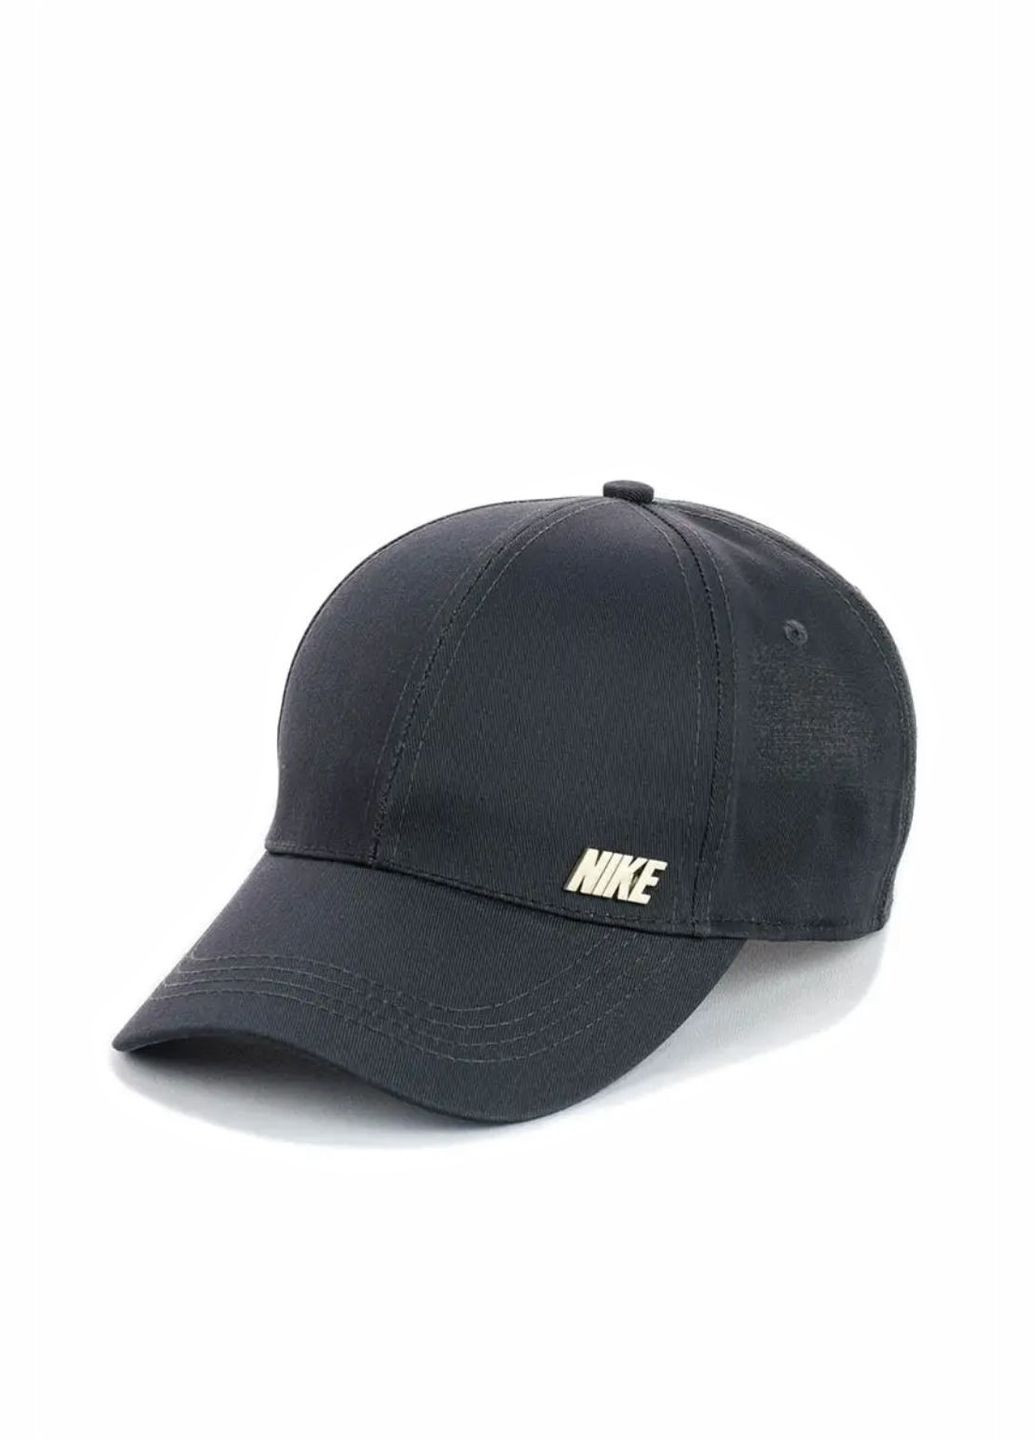 Кепка молодежная Найк / Nike M/L No Brand кепка унісекс (282842662)